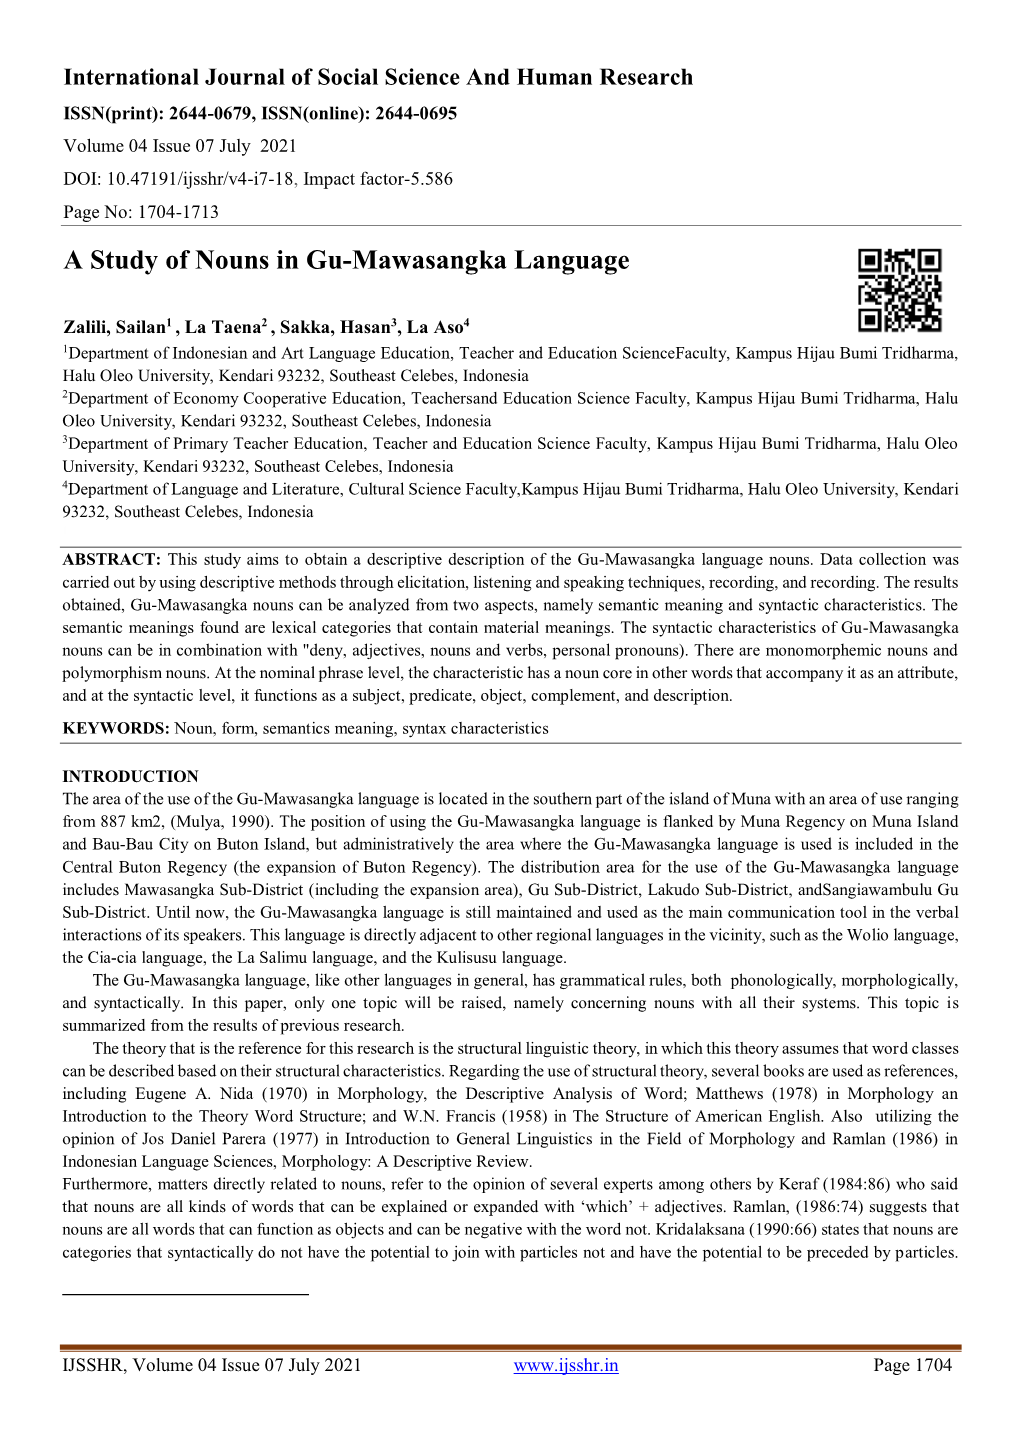 A Study of Nouns in Gu-Mawasangka Language